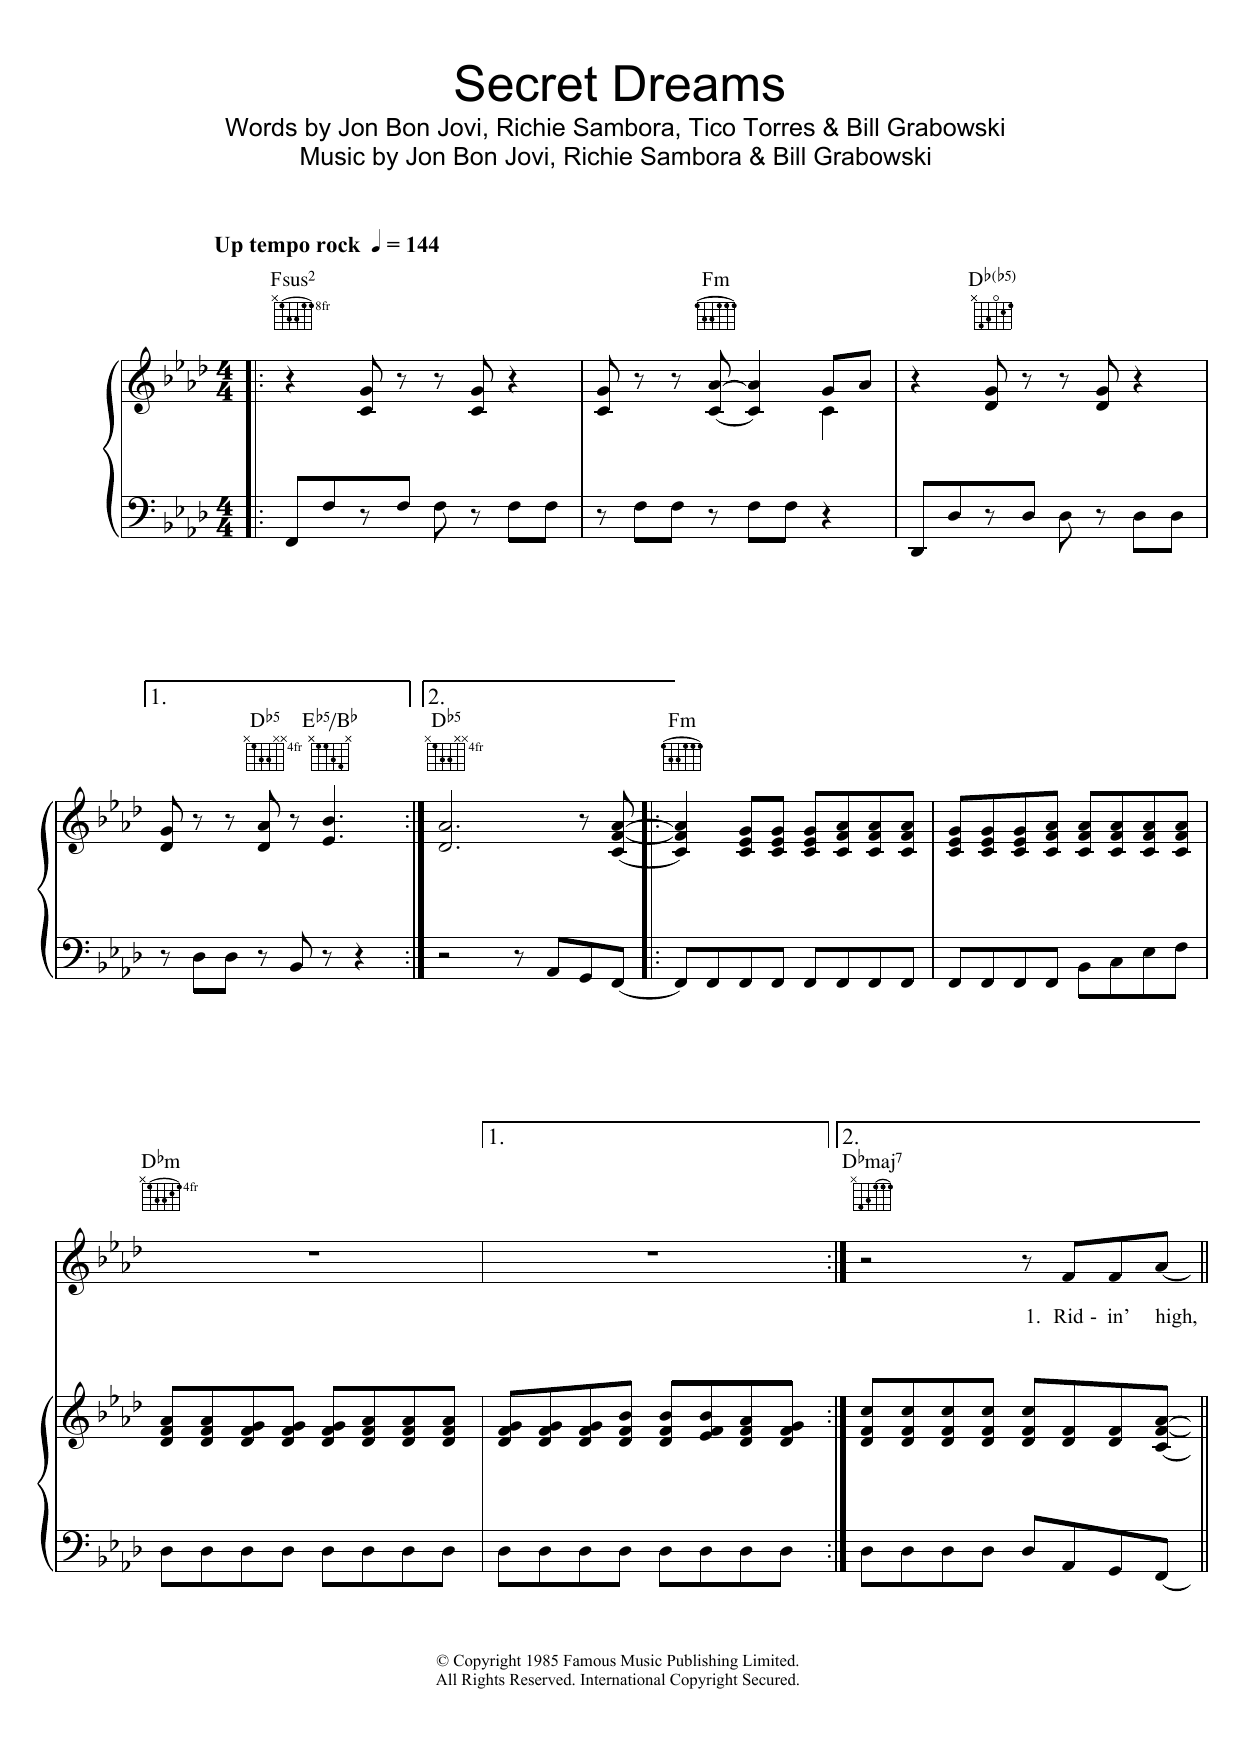 Bon Jovi Secret Dreams Sheet Music Notes & Chords for Piano, Vocal & Guitar (Right-Hand Melody) - Download or Print PDF